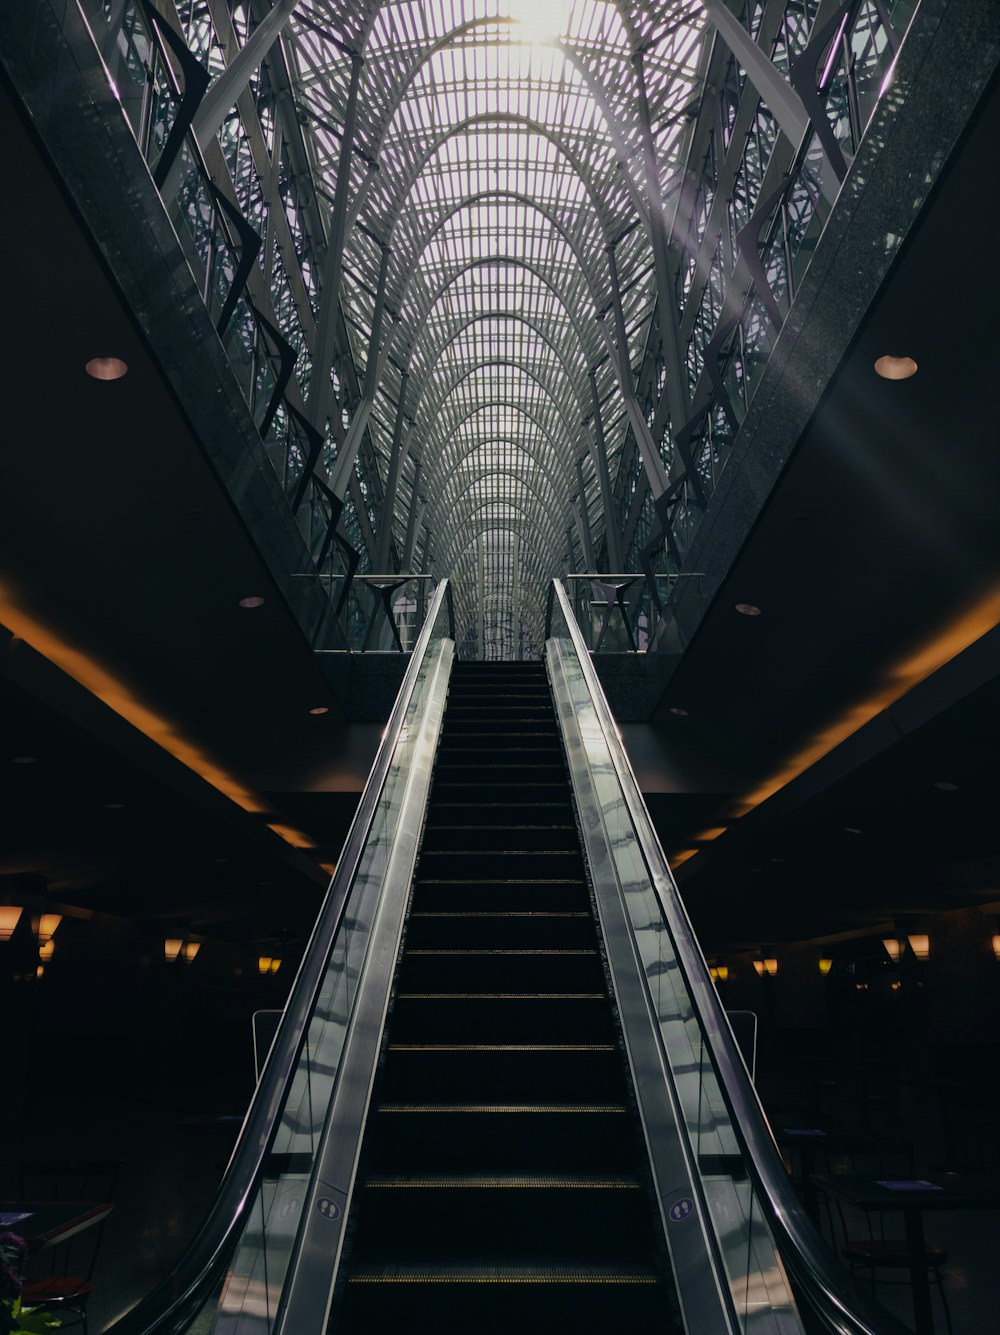 gray and black escalator in a tunnel